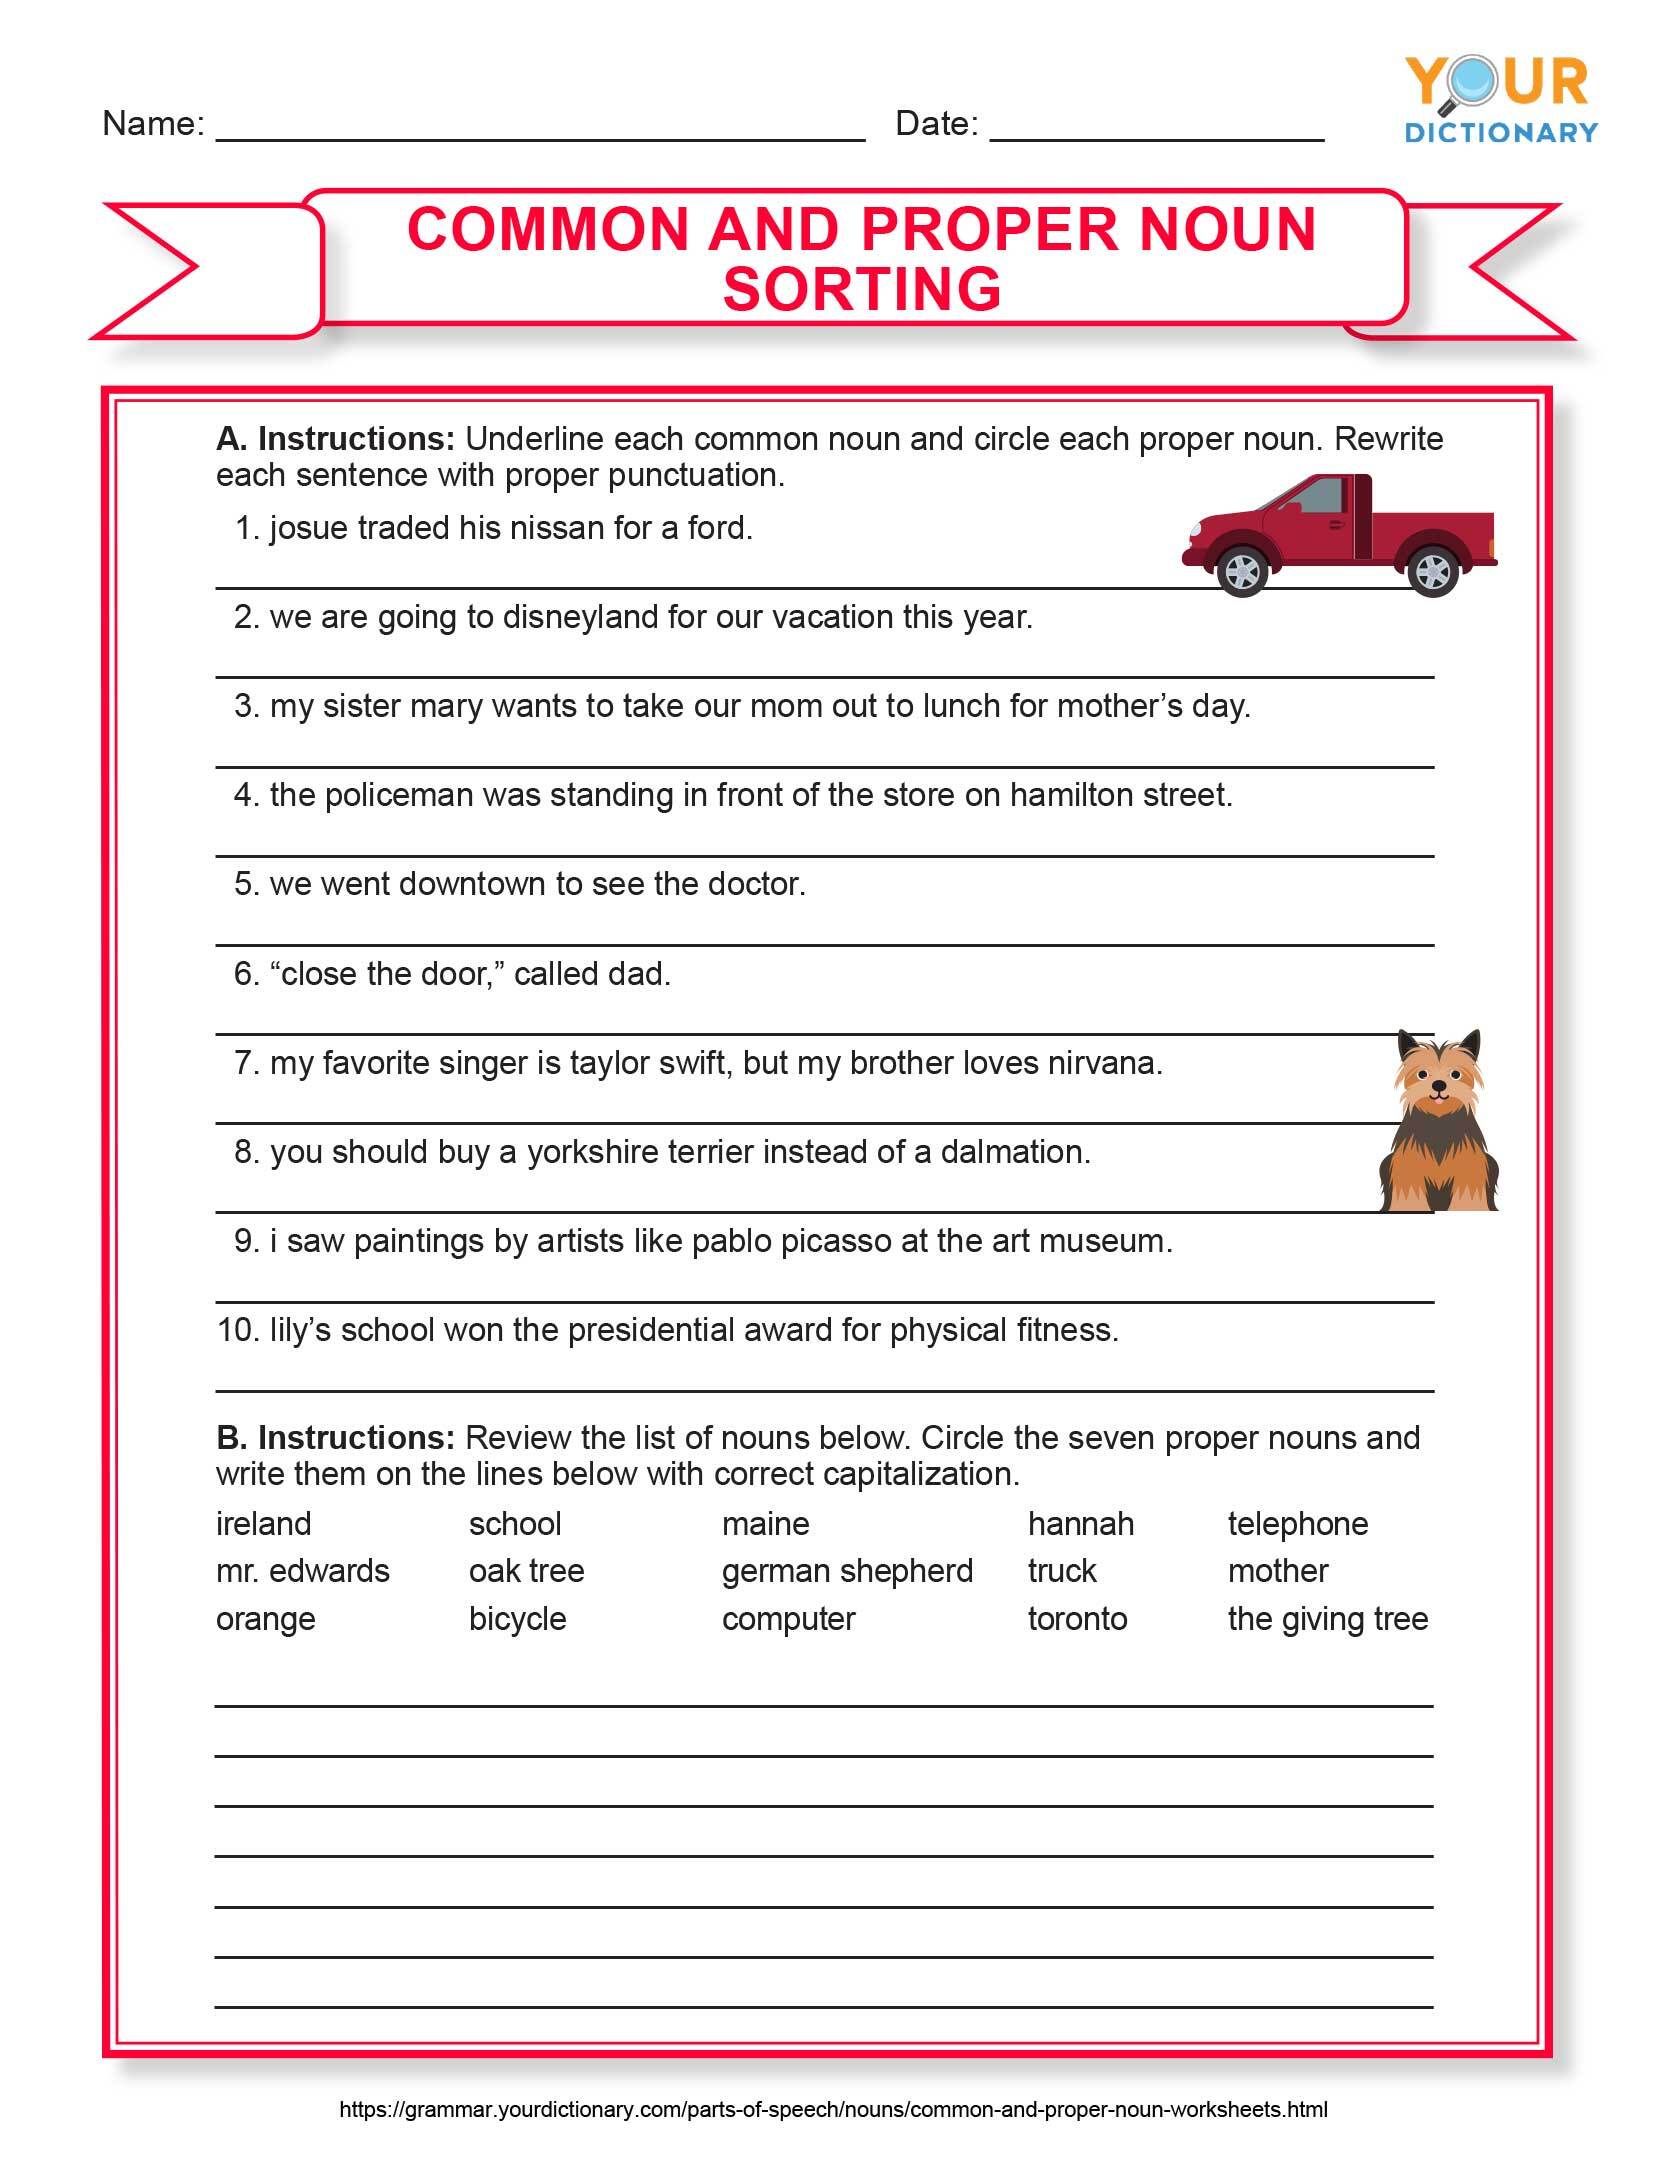 Mon Nouns Proper Nouns And Ouns Worksheets Worksheets For Kindergarten